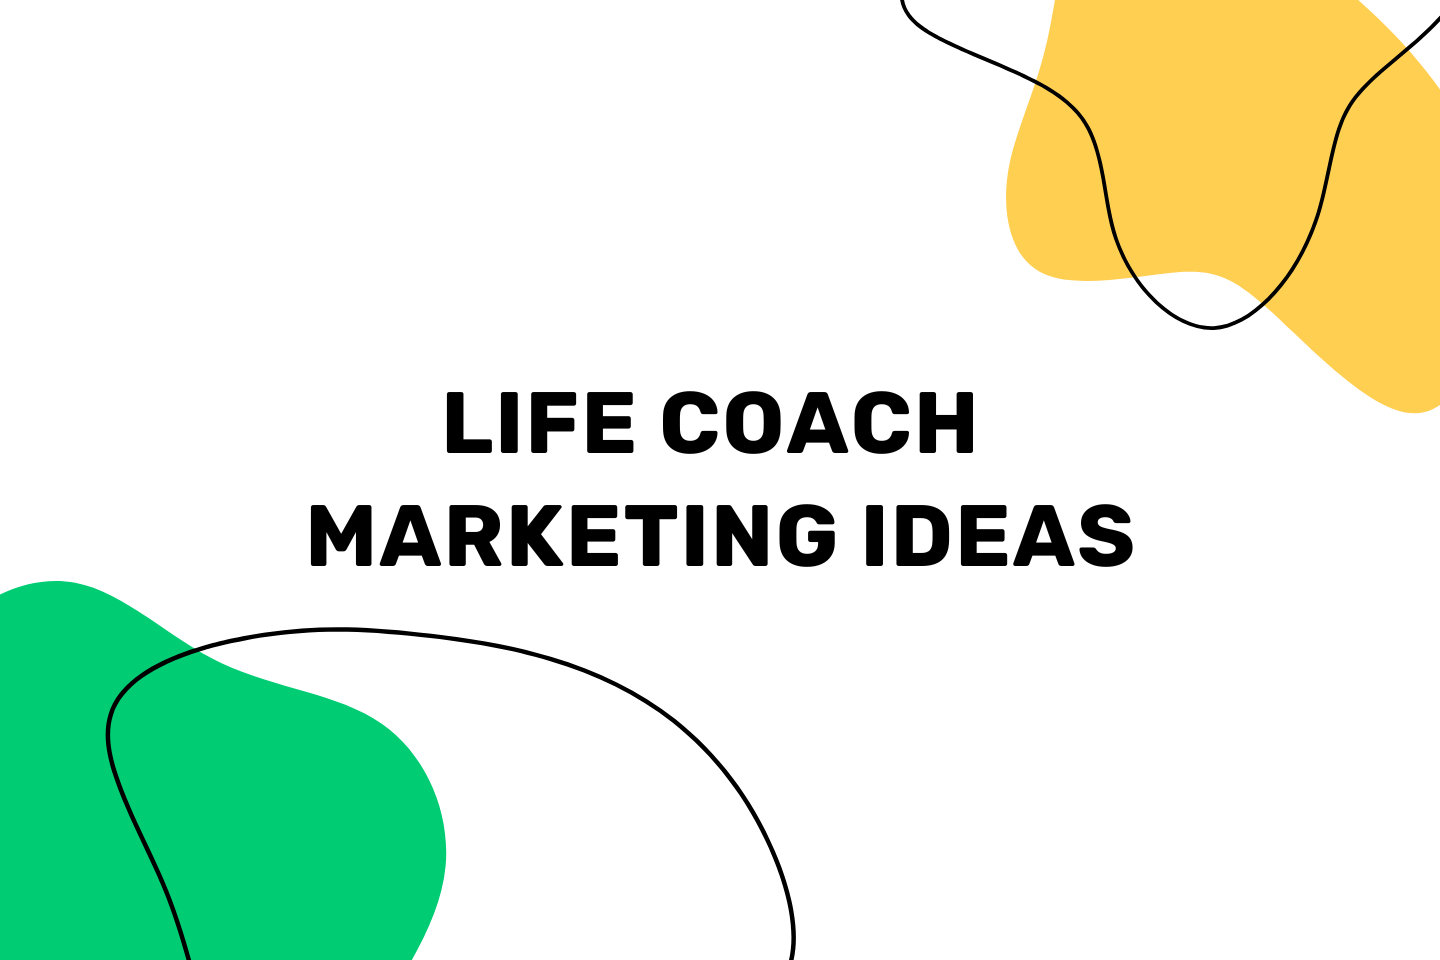 Life Coach Marketing Ideas